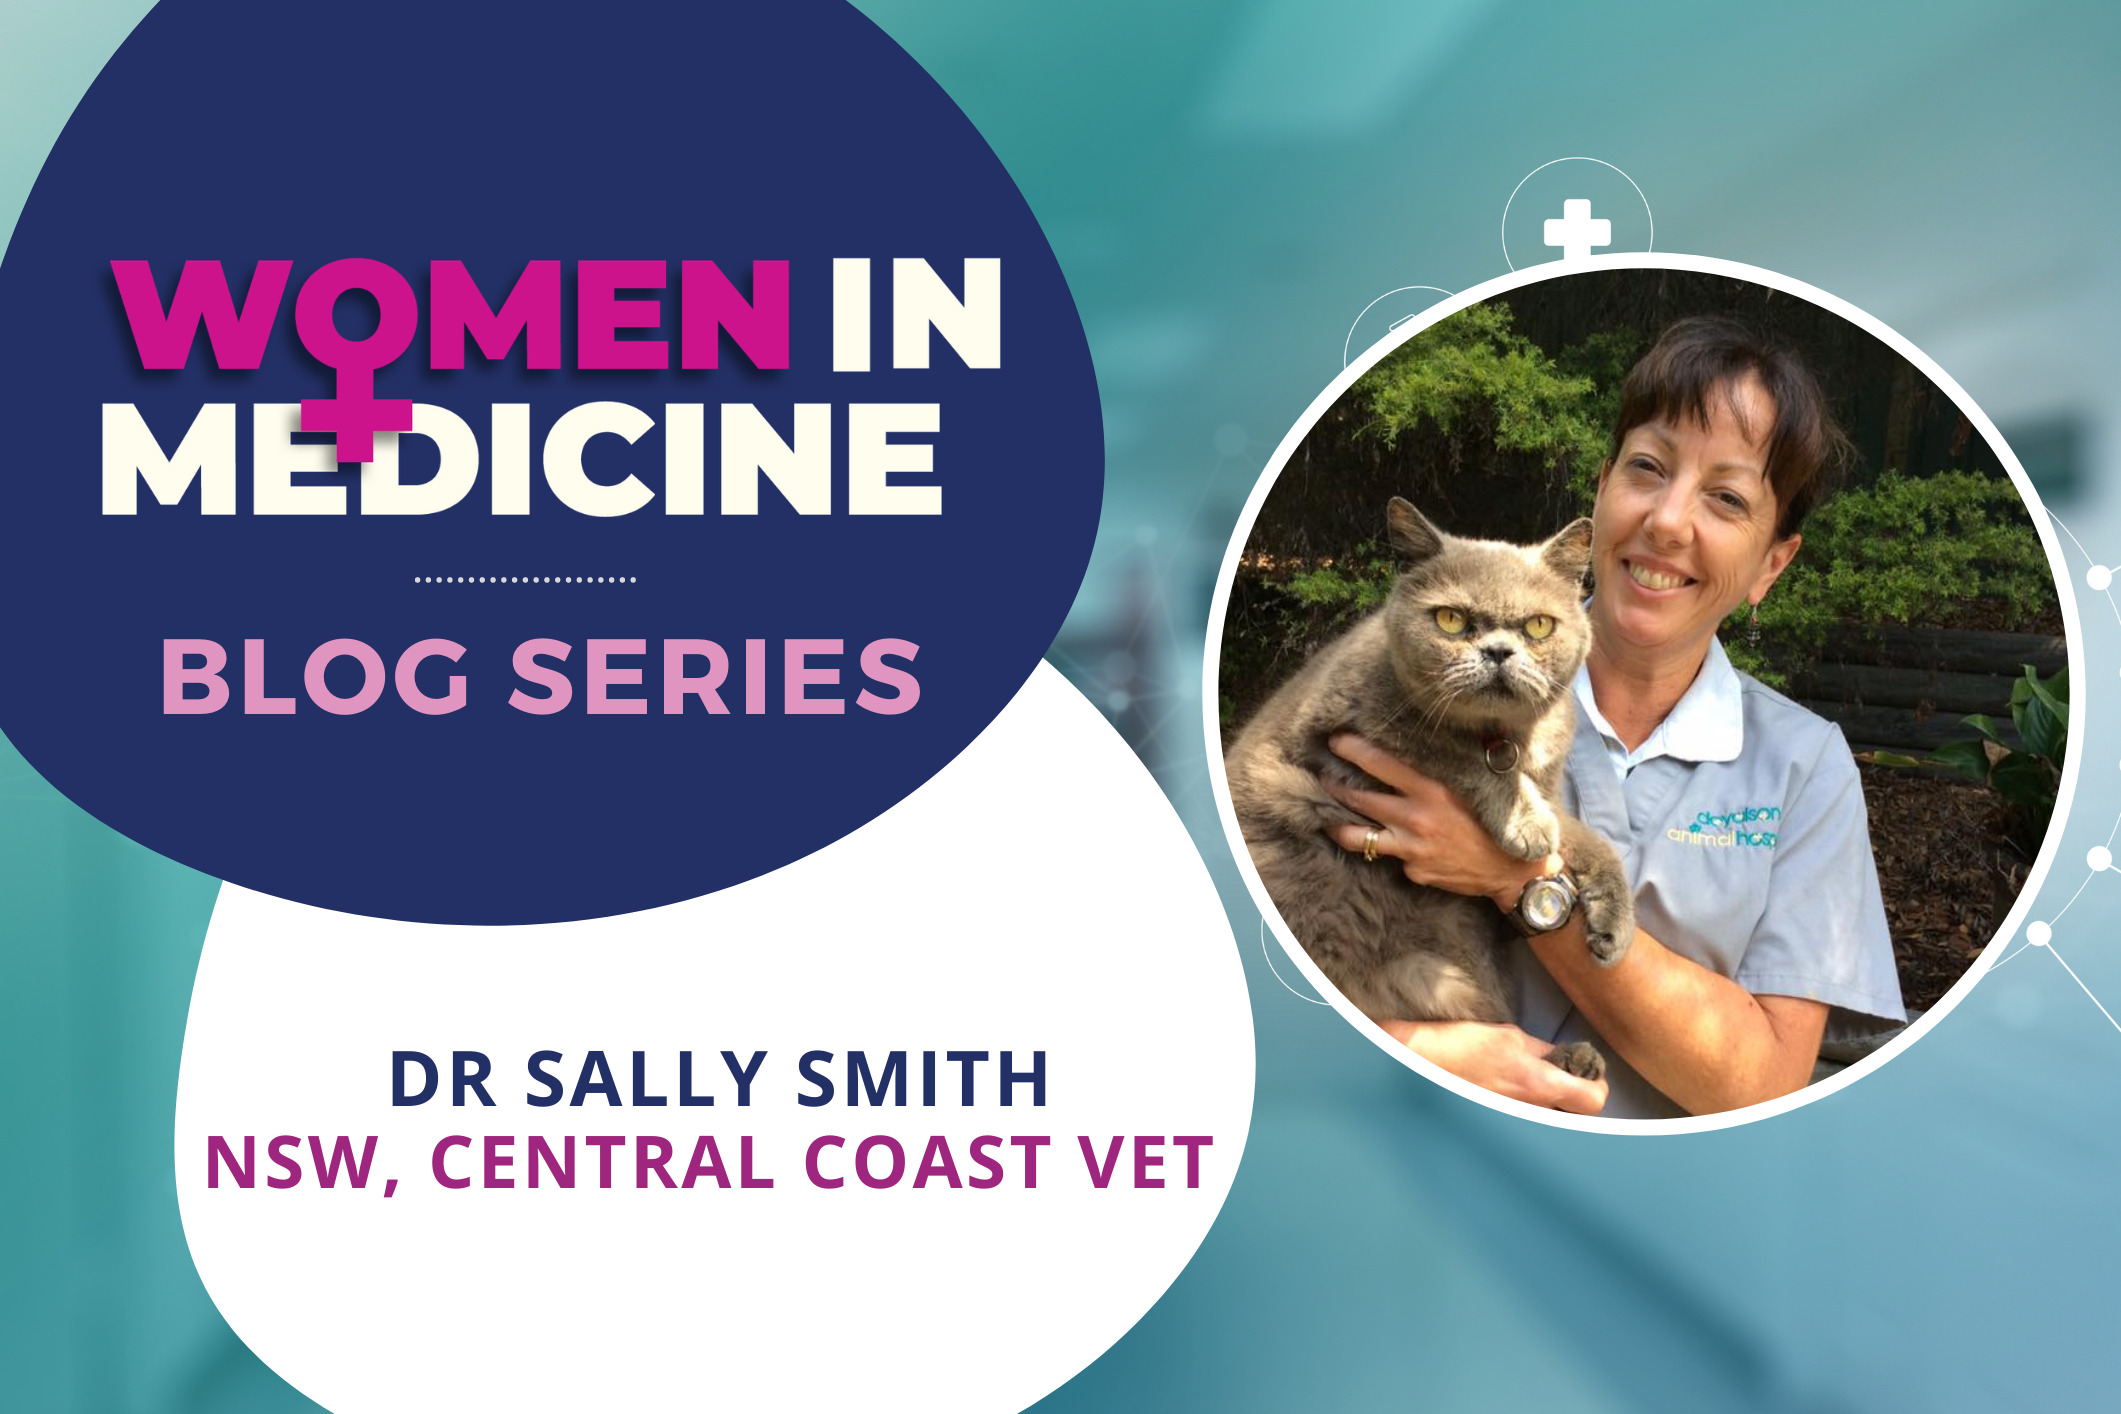 Women in Medicine Series - Spotlight on NSW Central Coast Vet, Dr Sally Smith Image